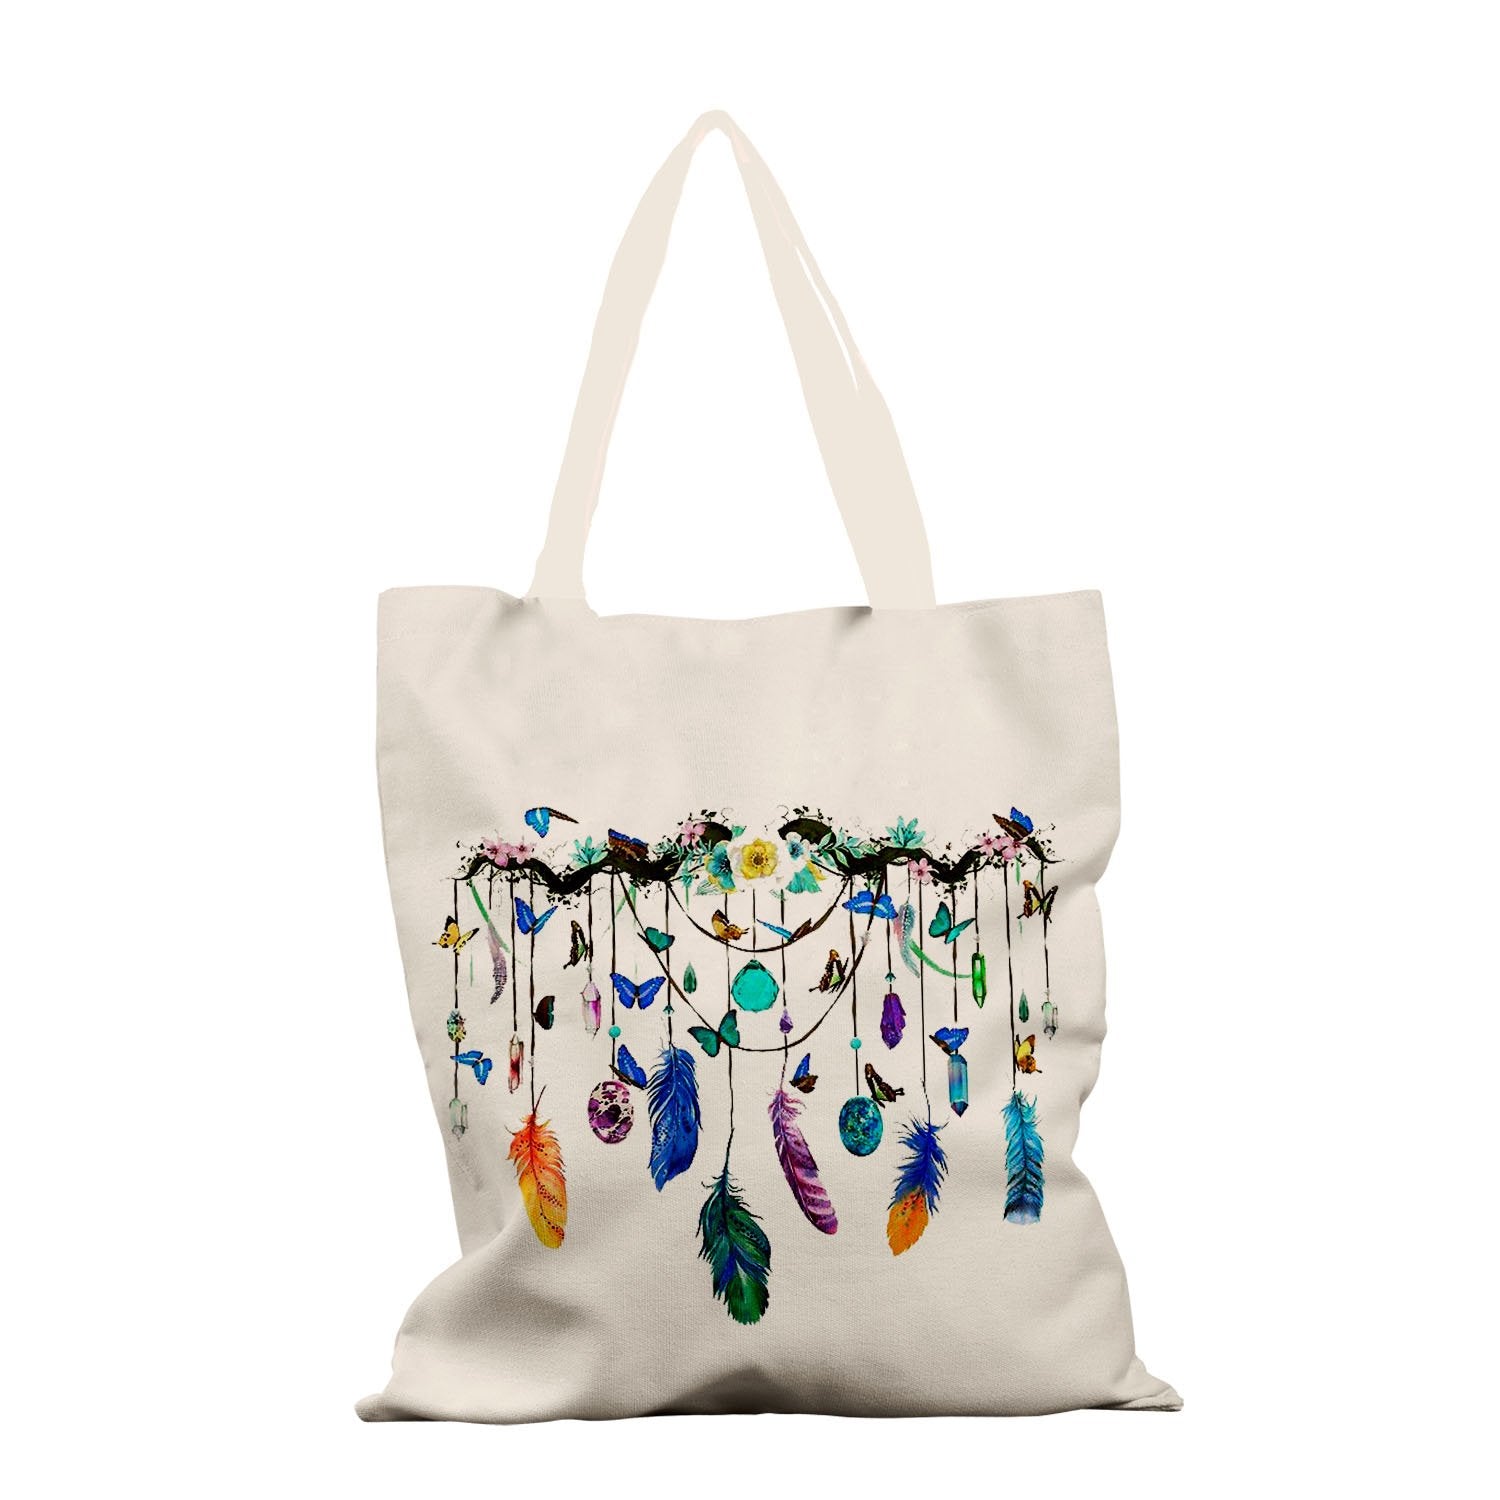 Mega Dream Bag sewing pattern from Bodobo Bags Ticklegrass Designs